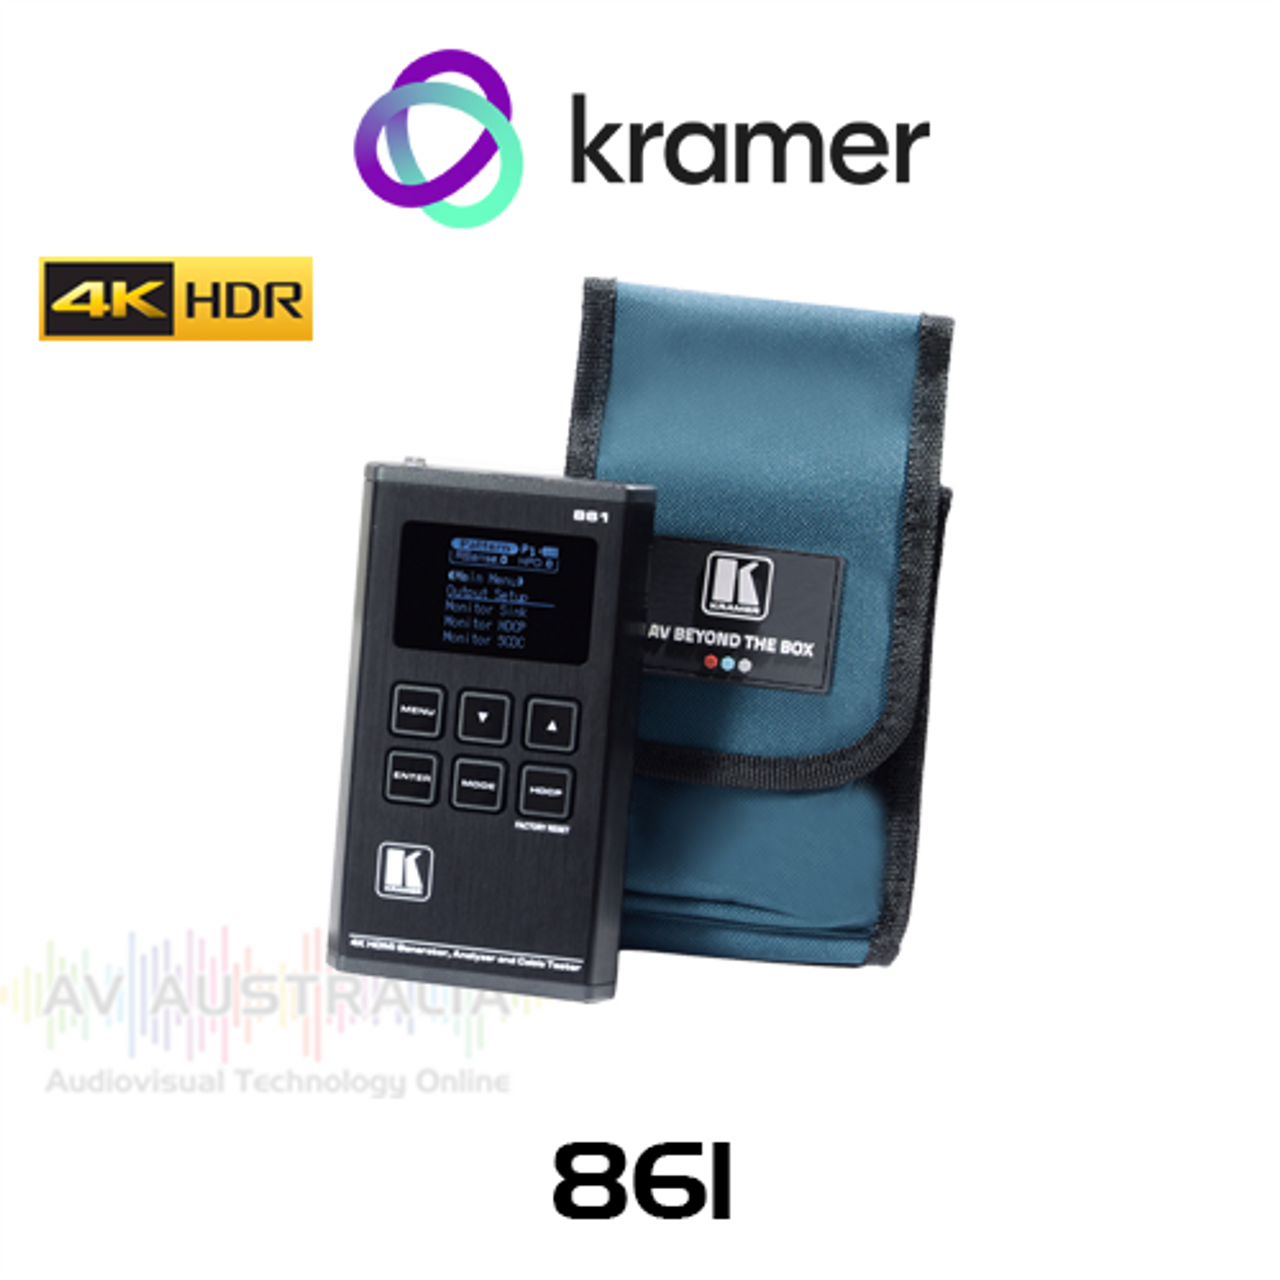 Kramer 861 4K HDR Pocket Signal Generator, Analyzer & Cable Tester